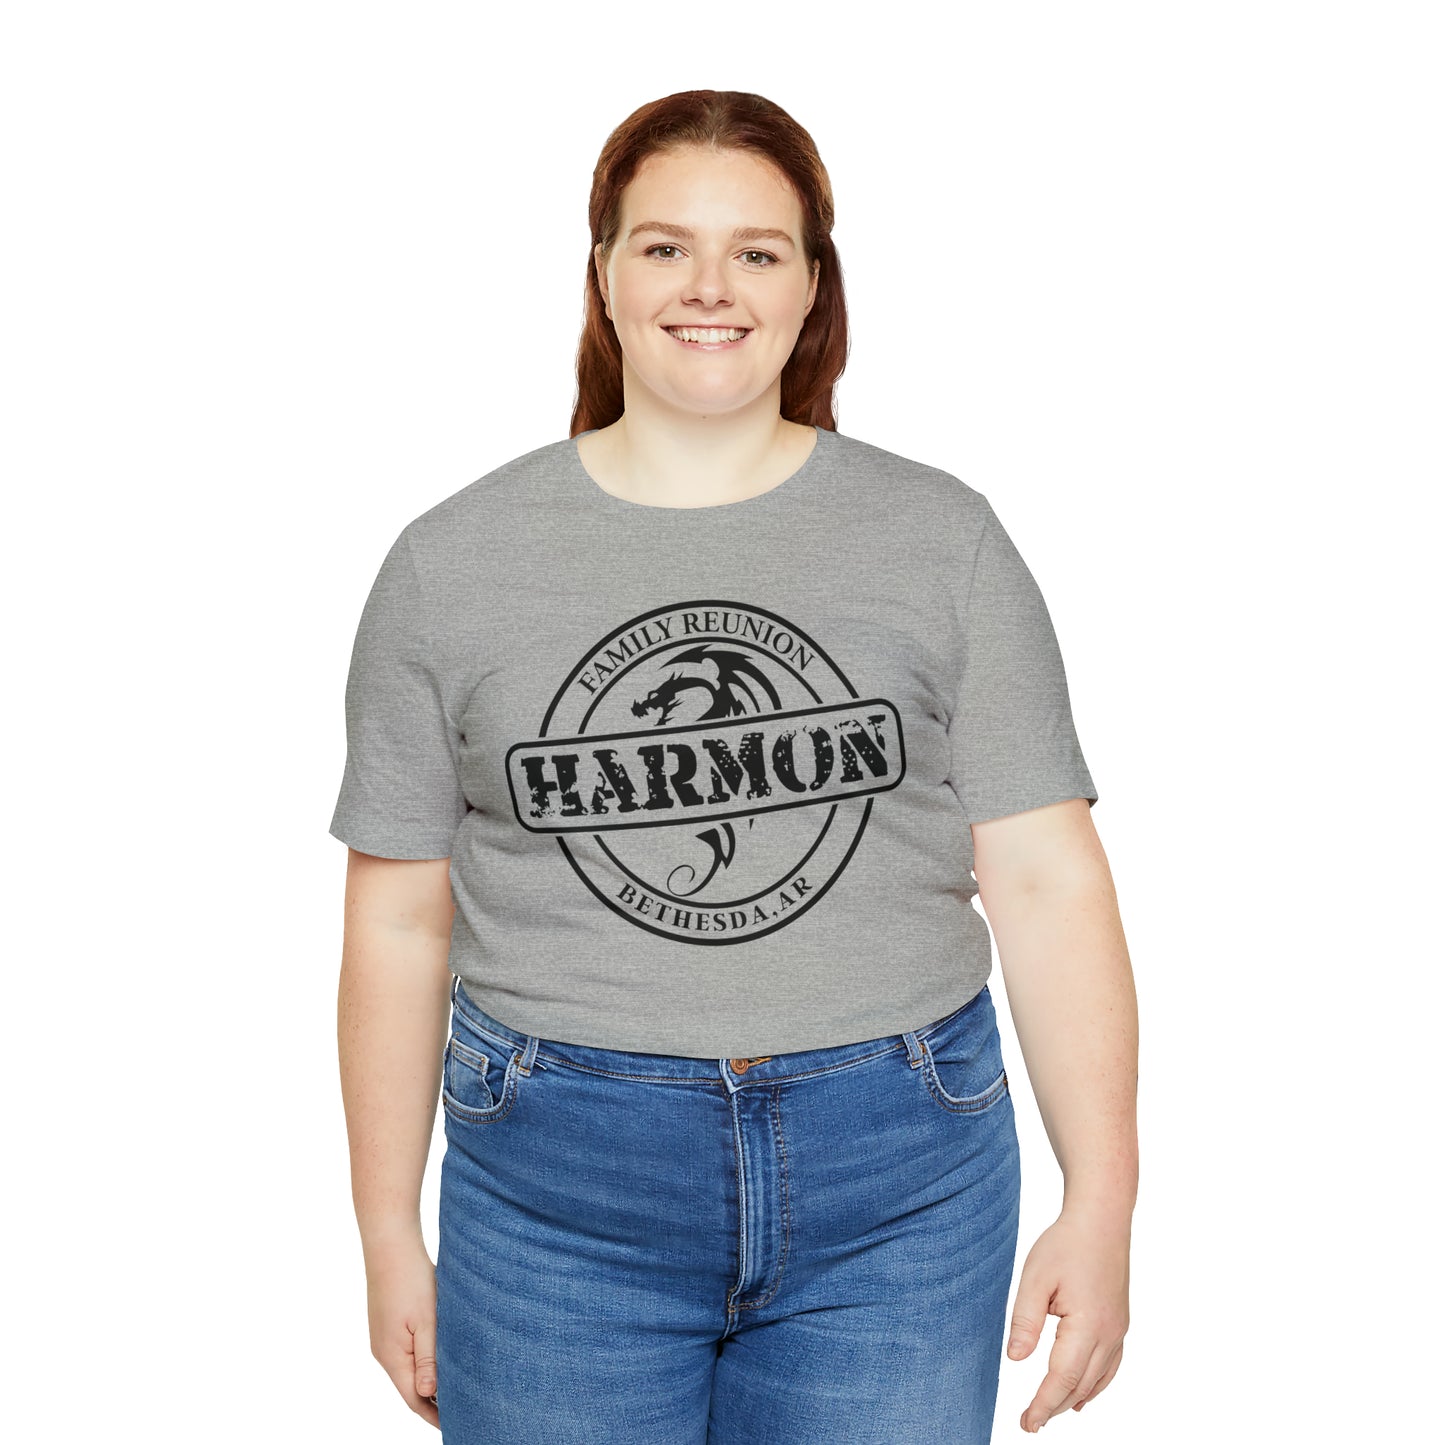 Harmon Crest Adult Shirt (Green/Gray)